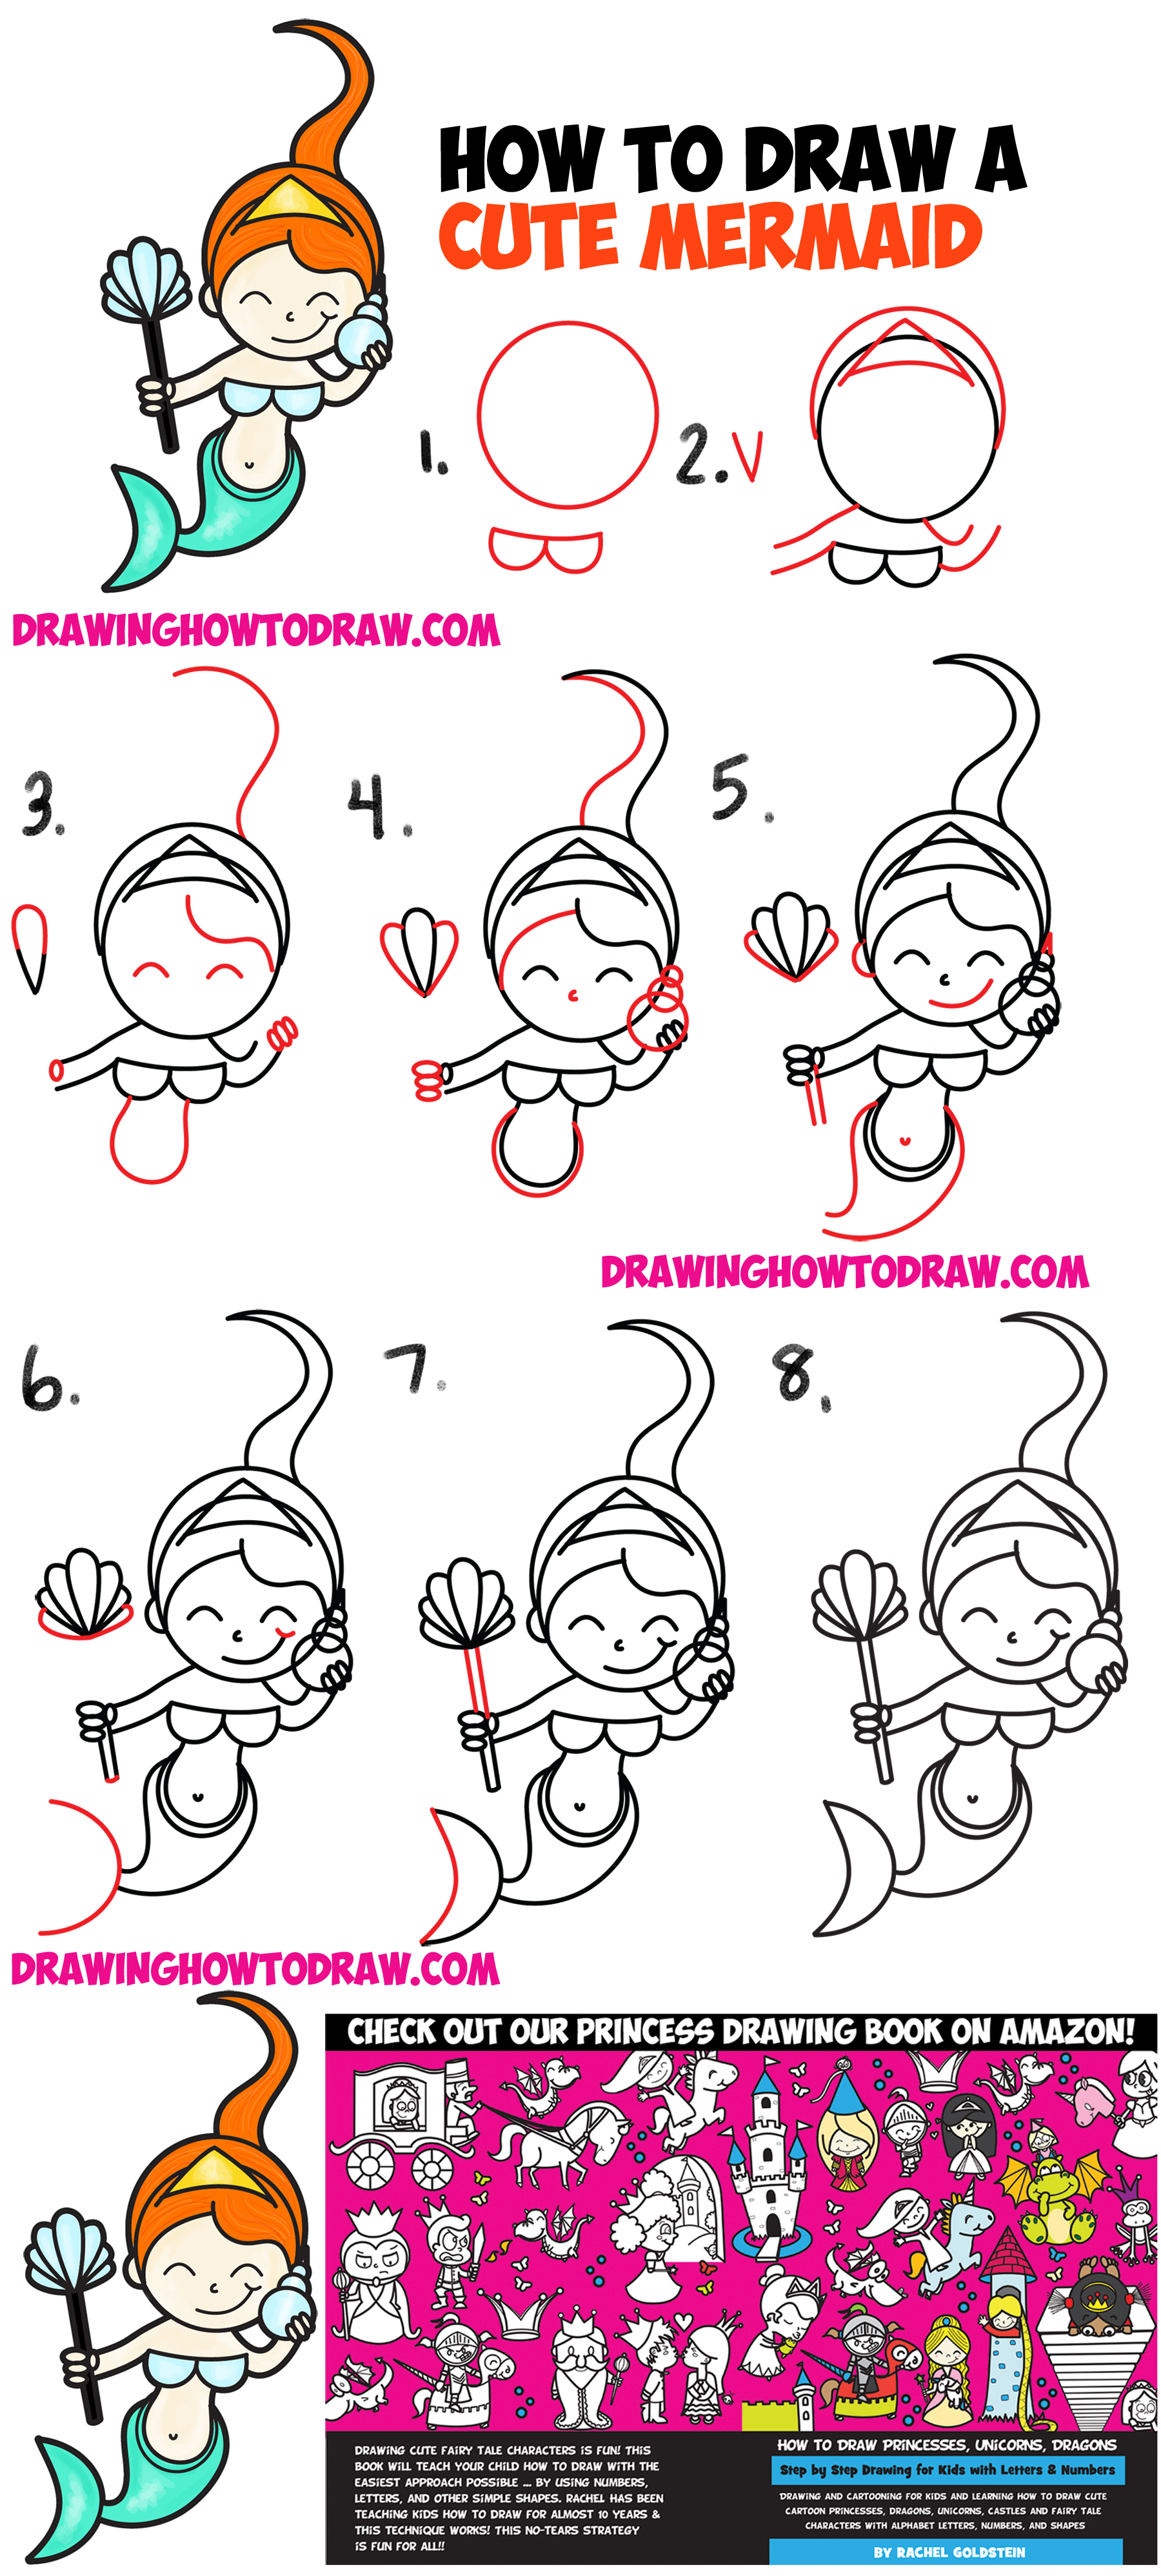 How to Draw a Cute Cartoon Mermaid (Kawaii) with Easy Step by Step